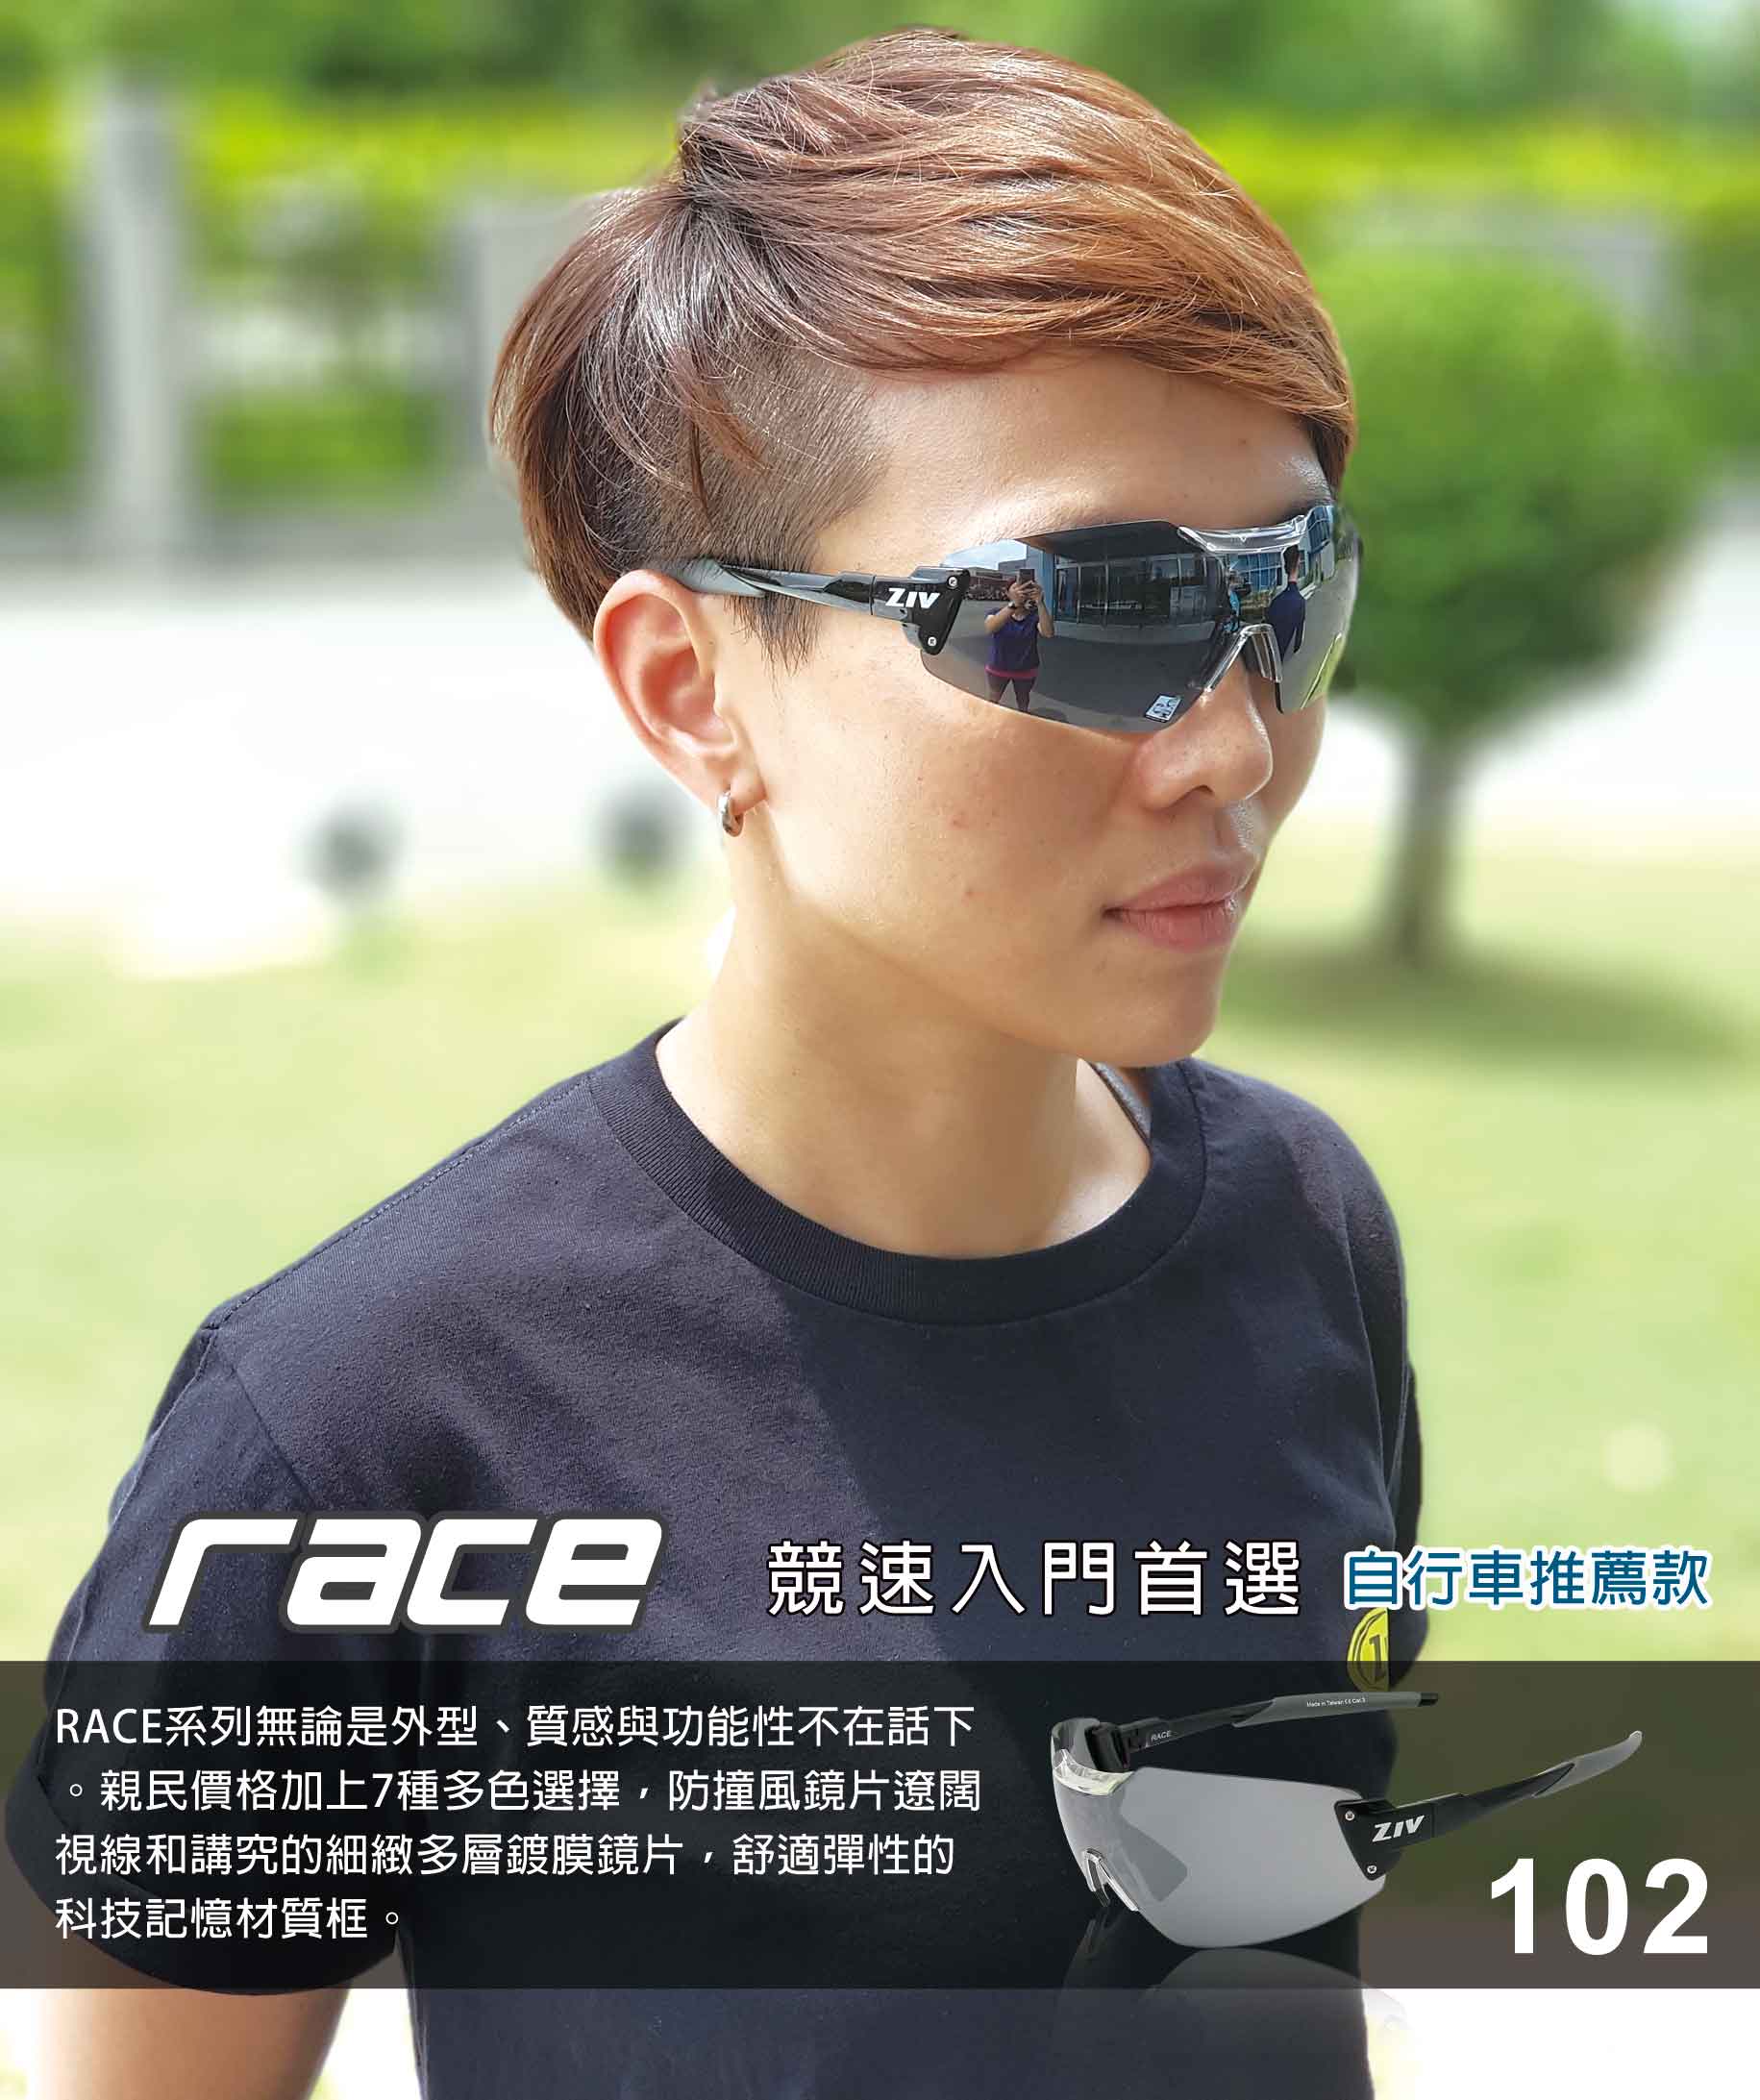 RACE系列-102 亮黑